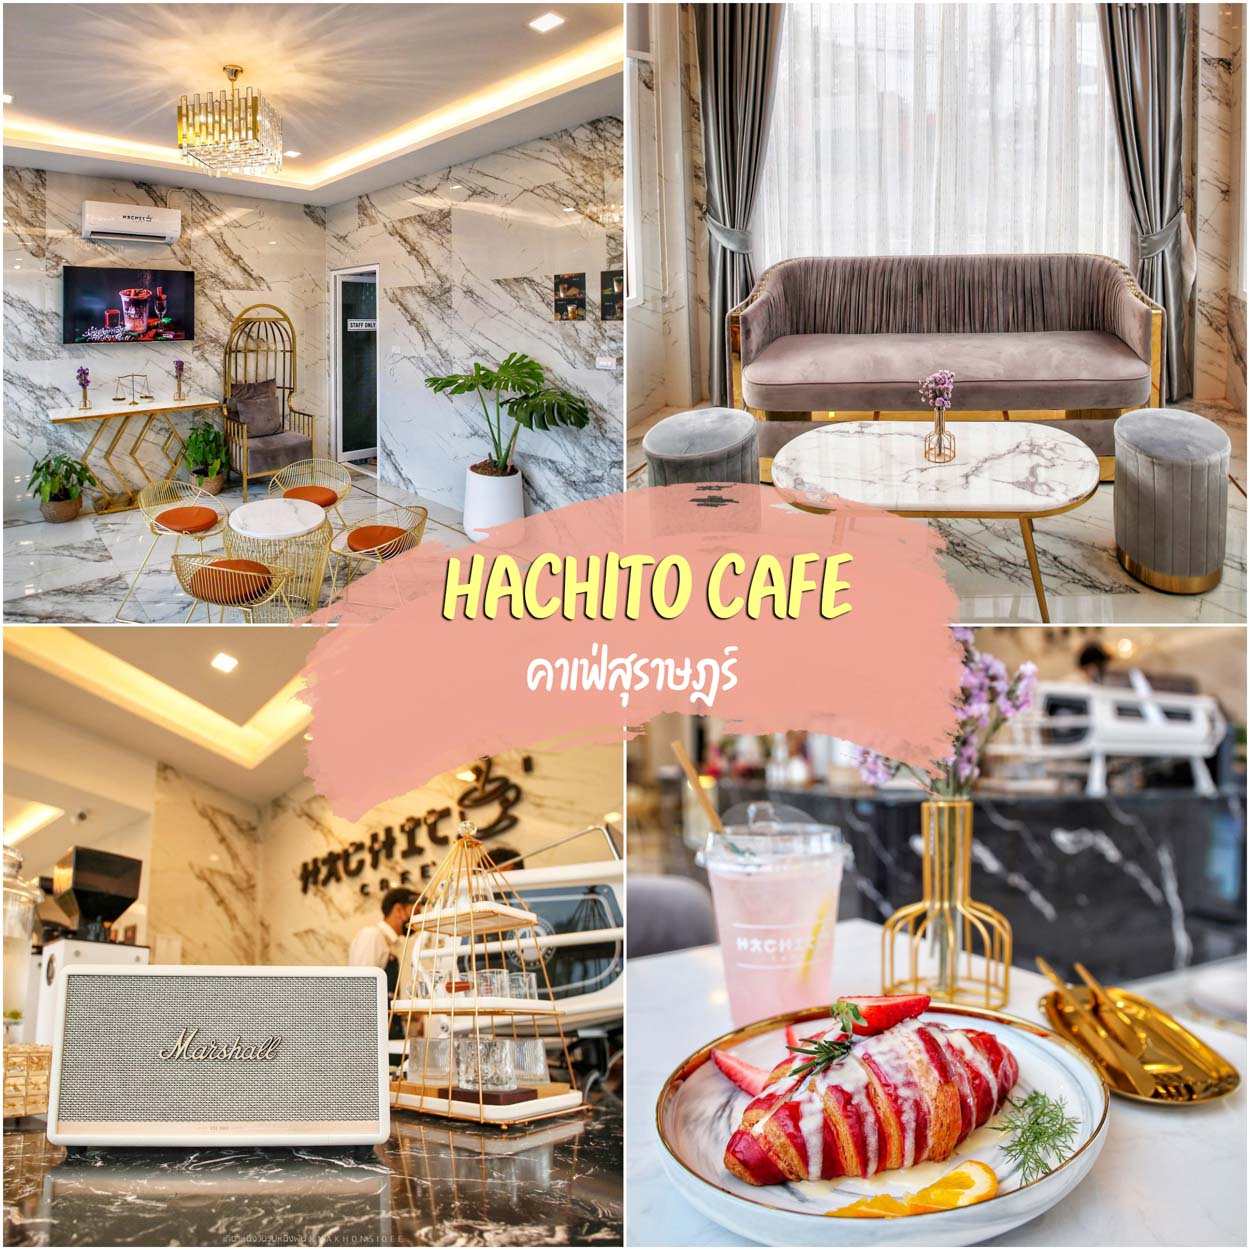 Hachito Cafe คาเฟ่สุราษฎร์ สไตล์ Luxury ประดับตกแต่งด้วยหินอ่อนสุดหรูทั้งร้าน ที่ถ่ายมุมไหนในร้านก็สวยไปหมด